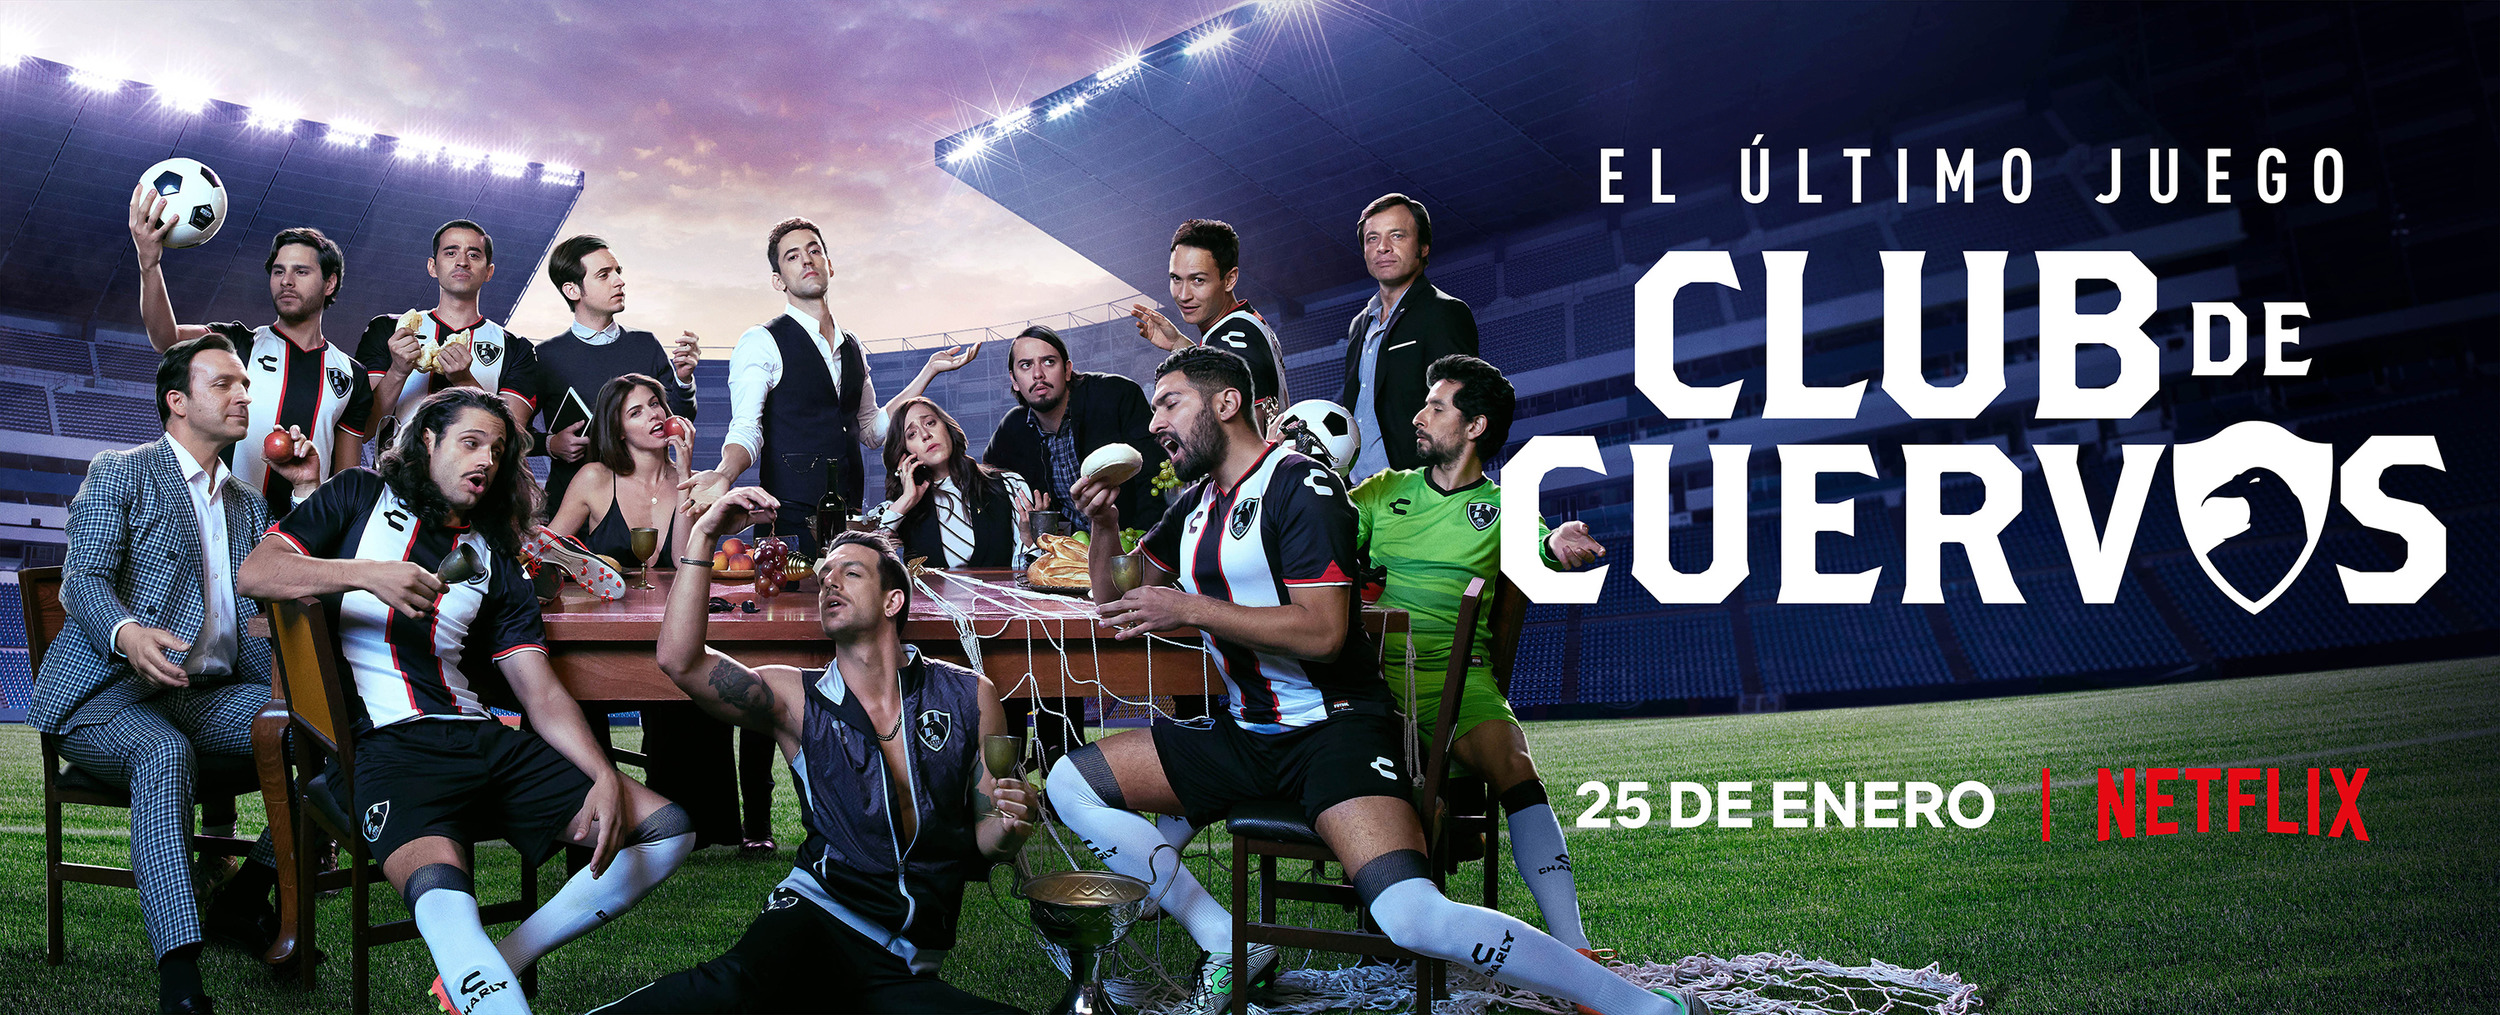 Mega Sized TV Poster Image for Club de Cuervos (#4 of 5)